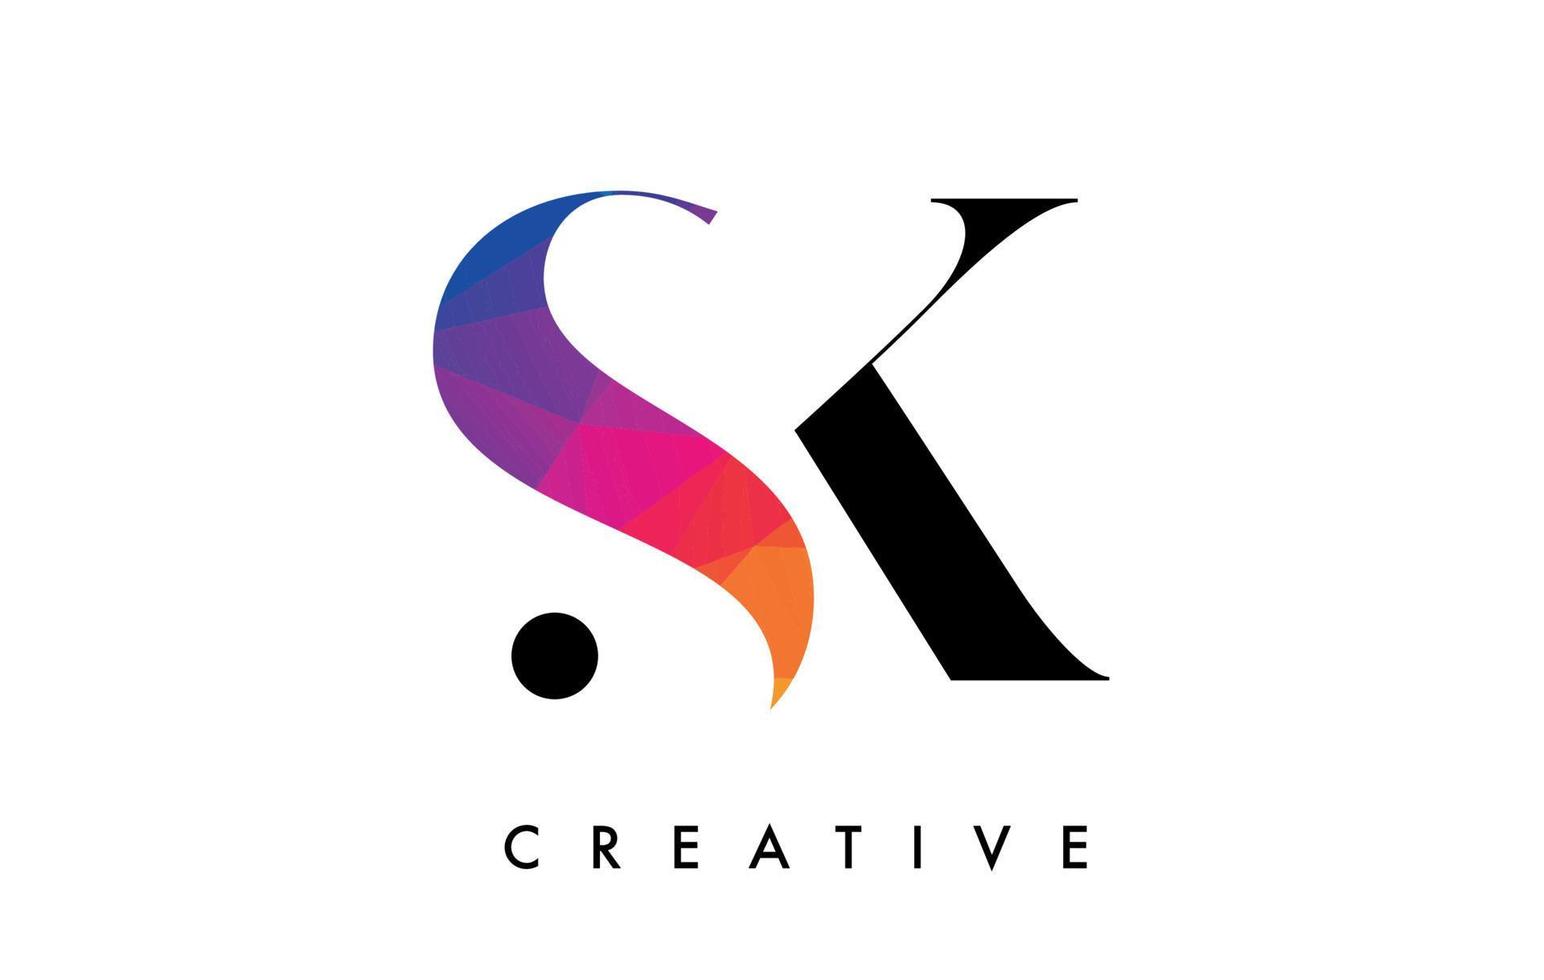 sk-briefdesign mit kreativem schnitt und bunter regenbogentextur vektor